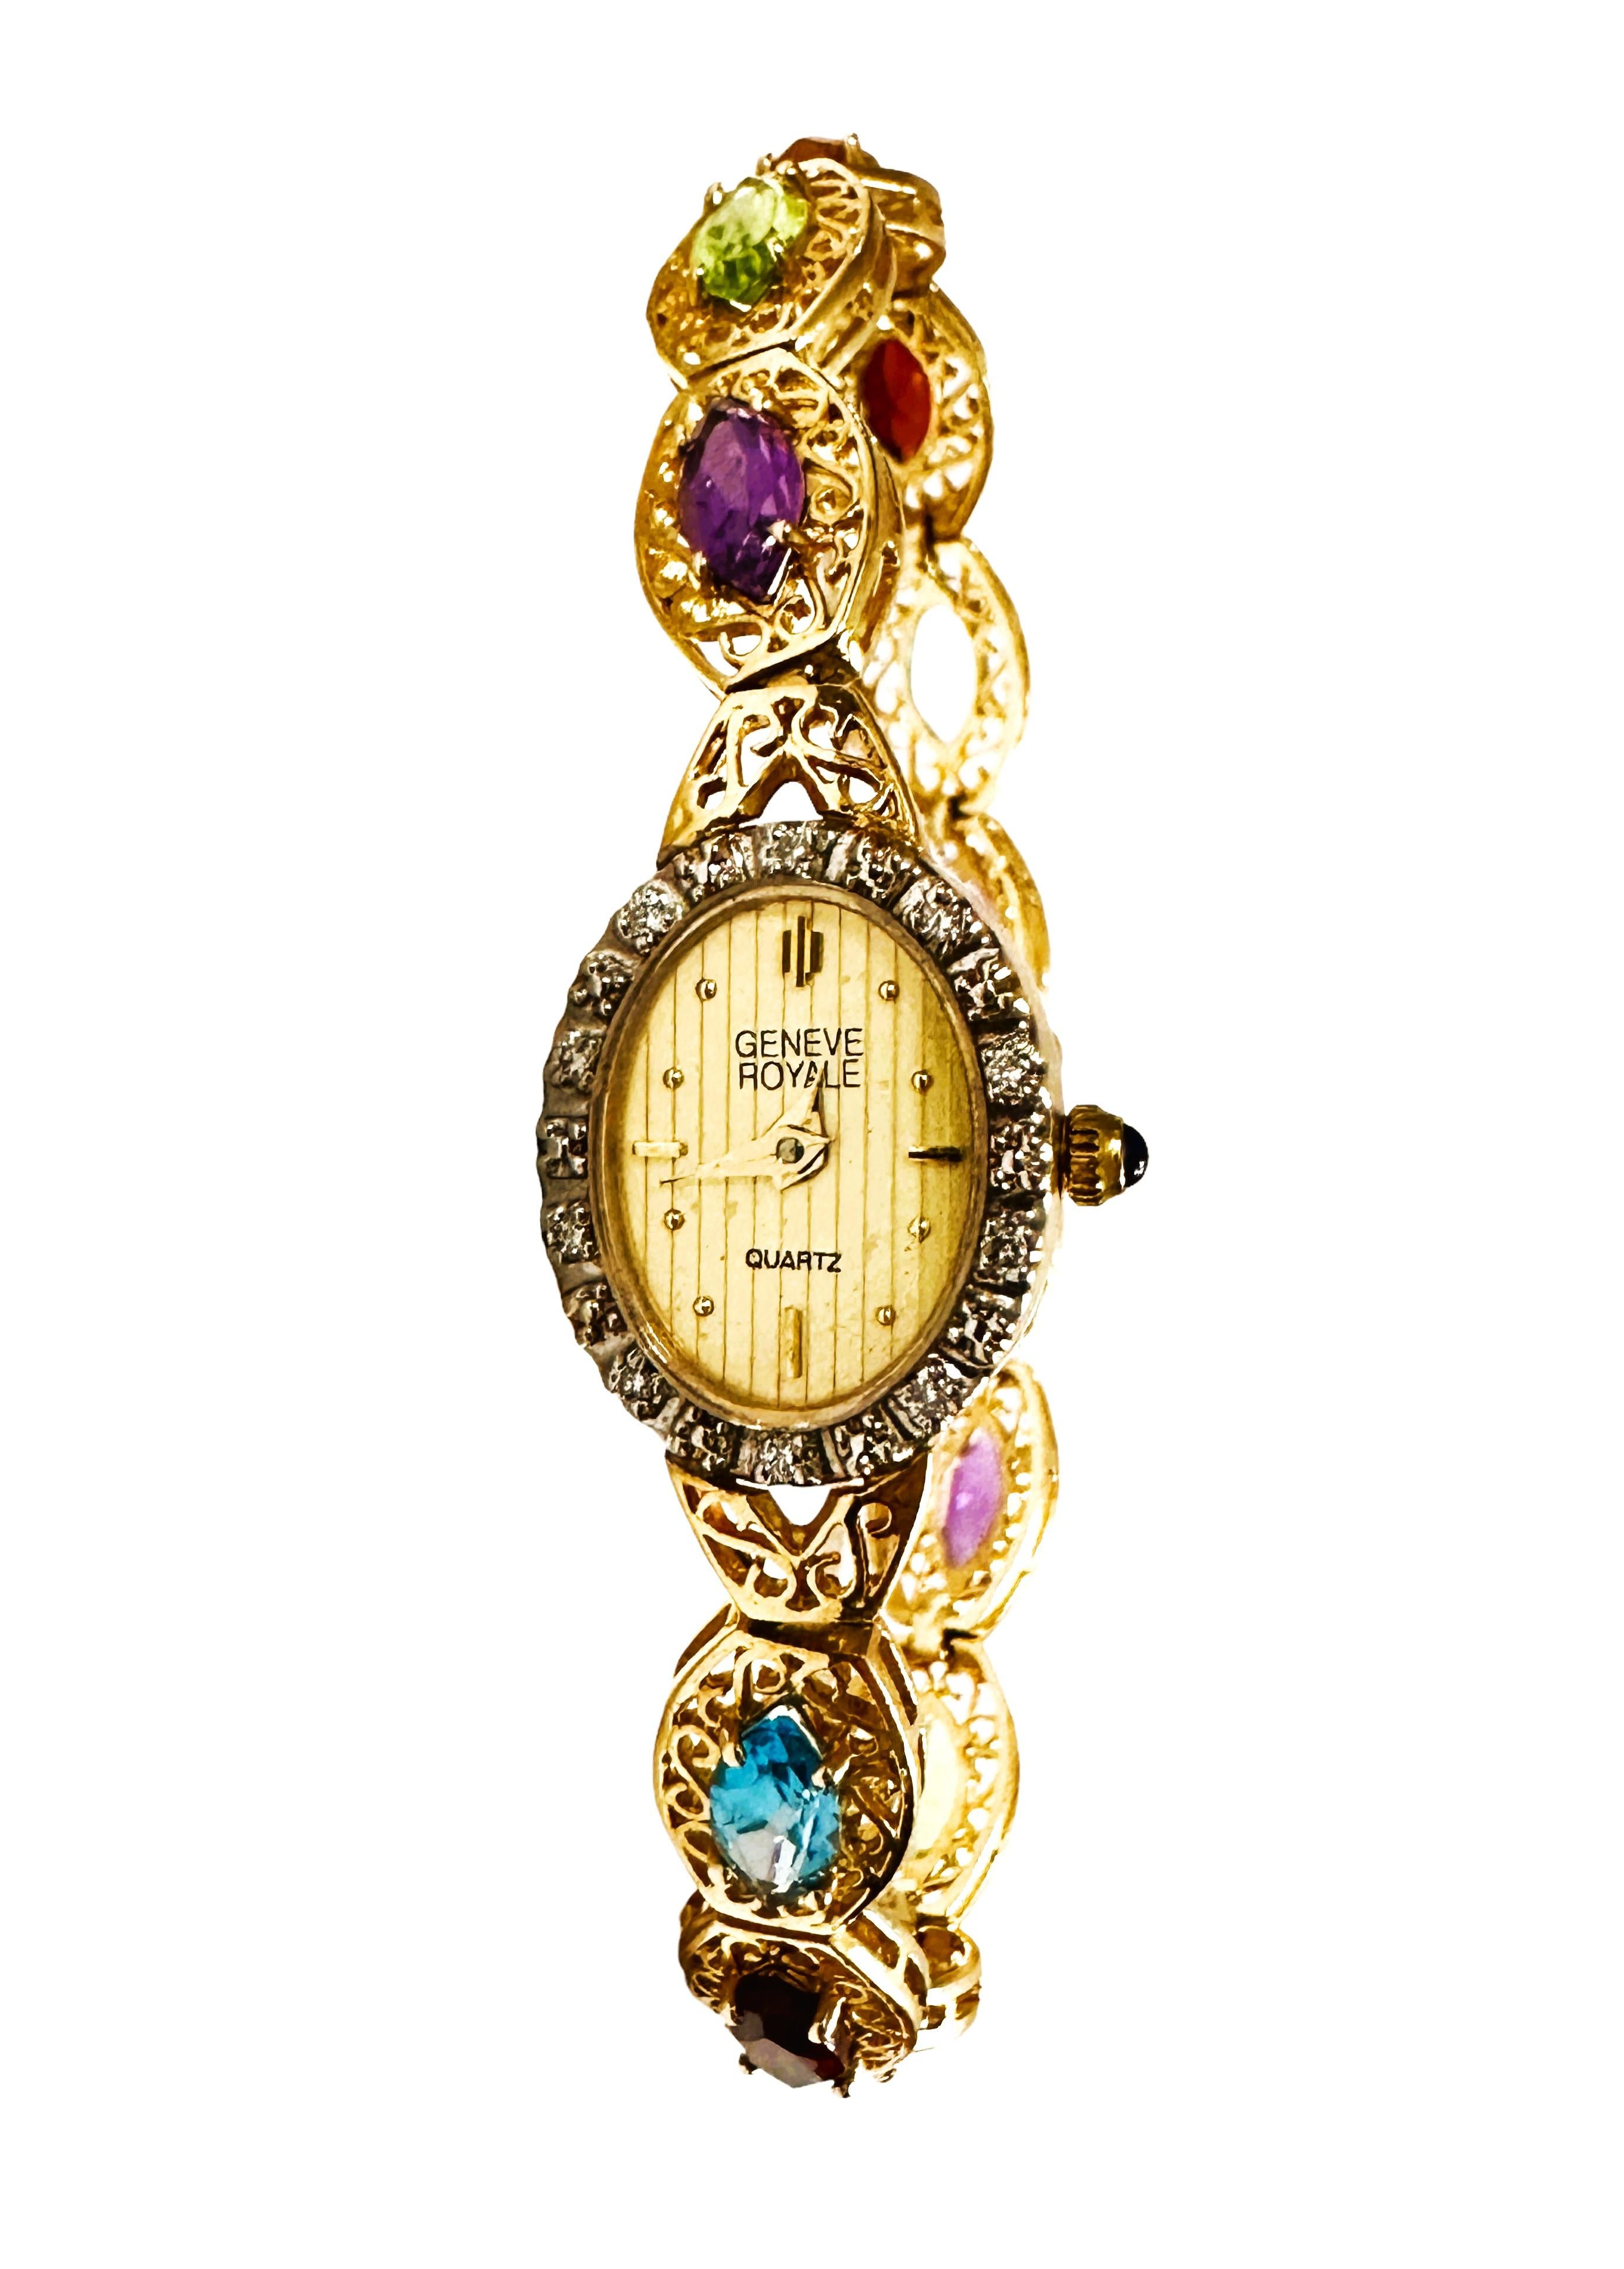 geneve gold watch price